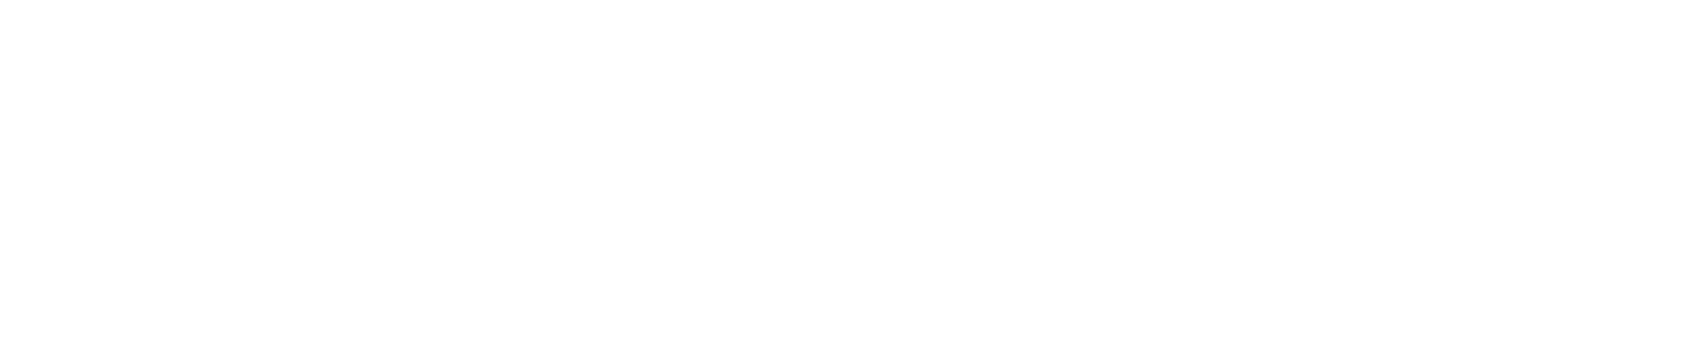 CROSS POWER,CROSS CREATION